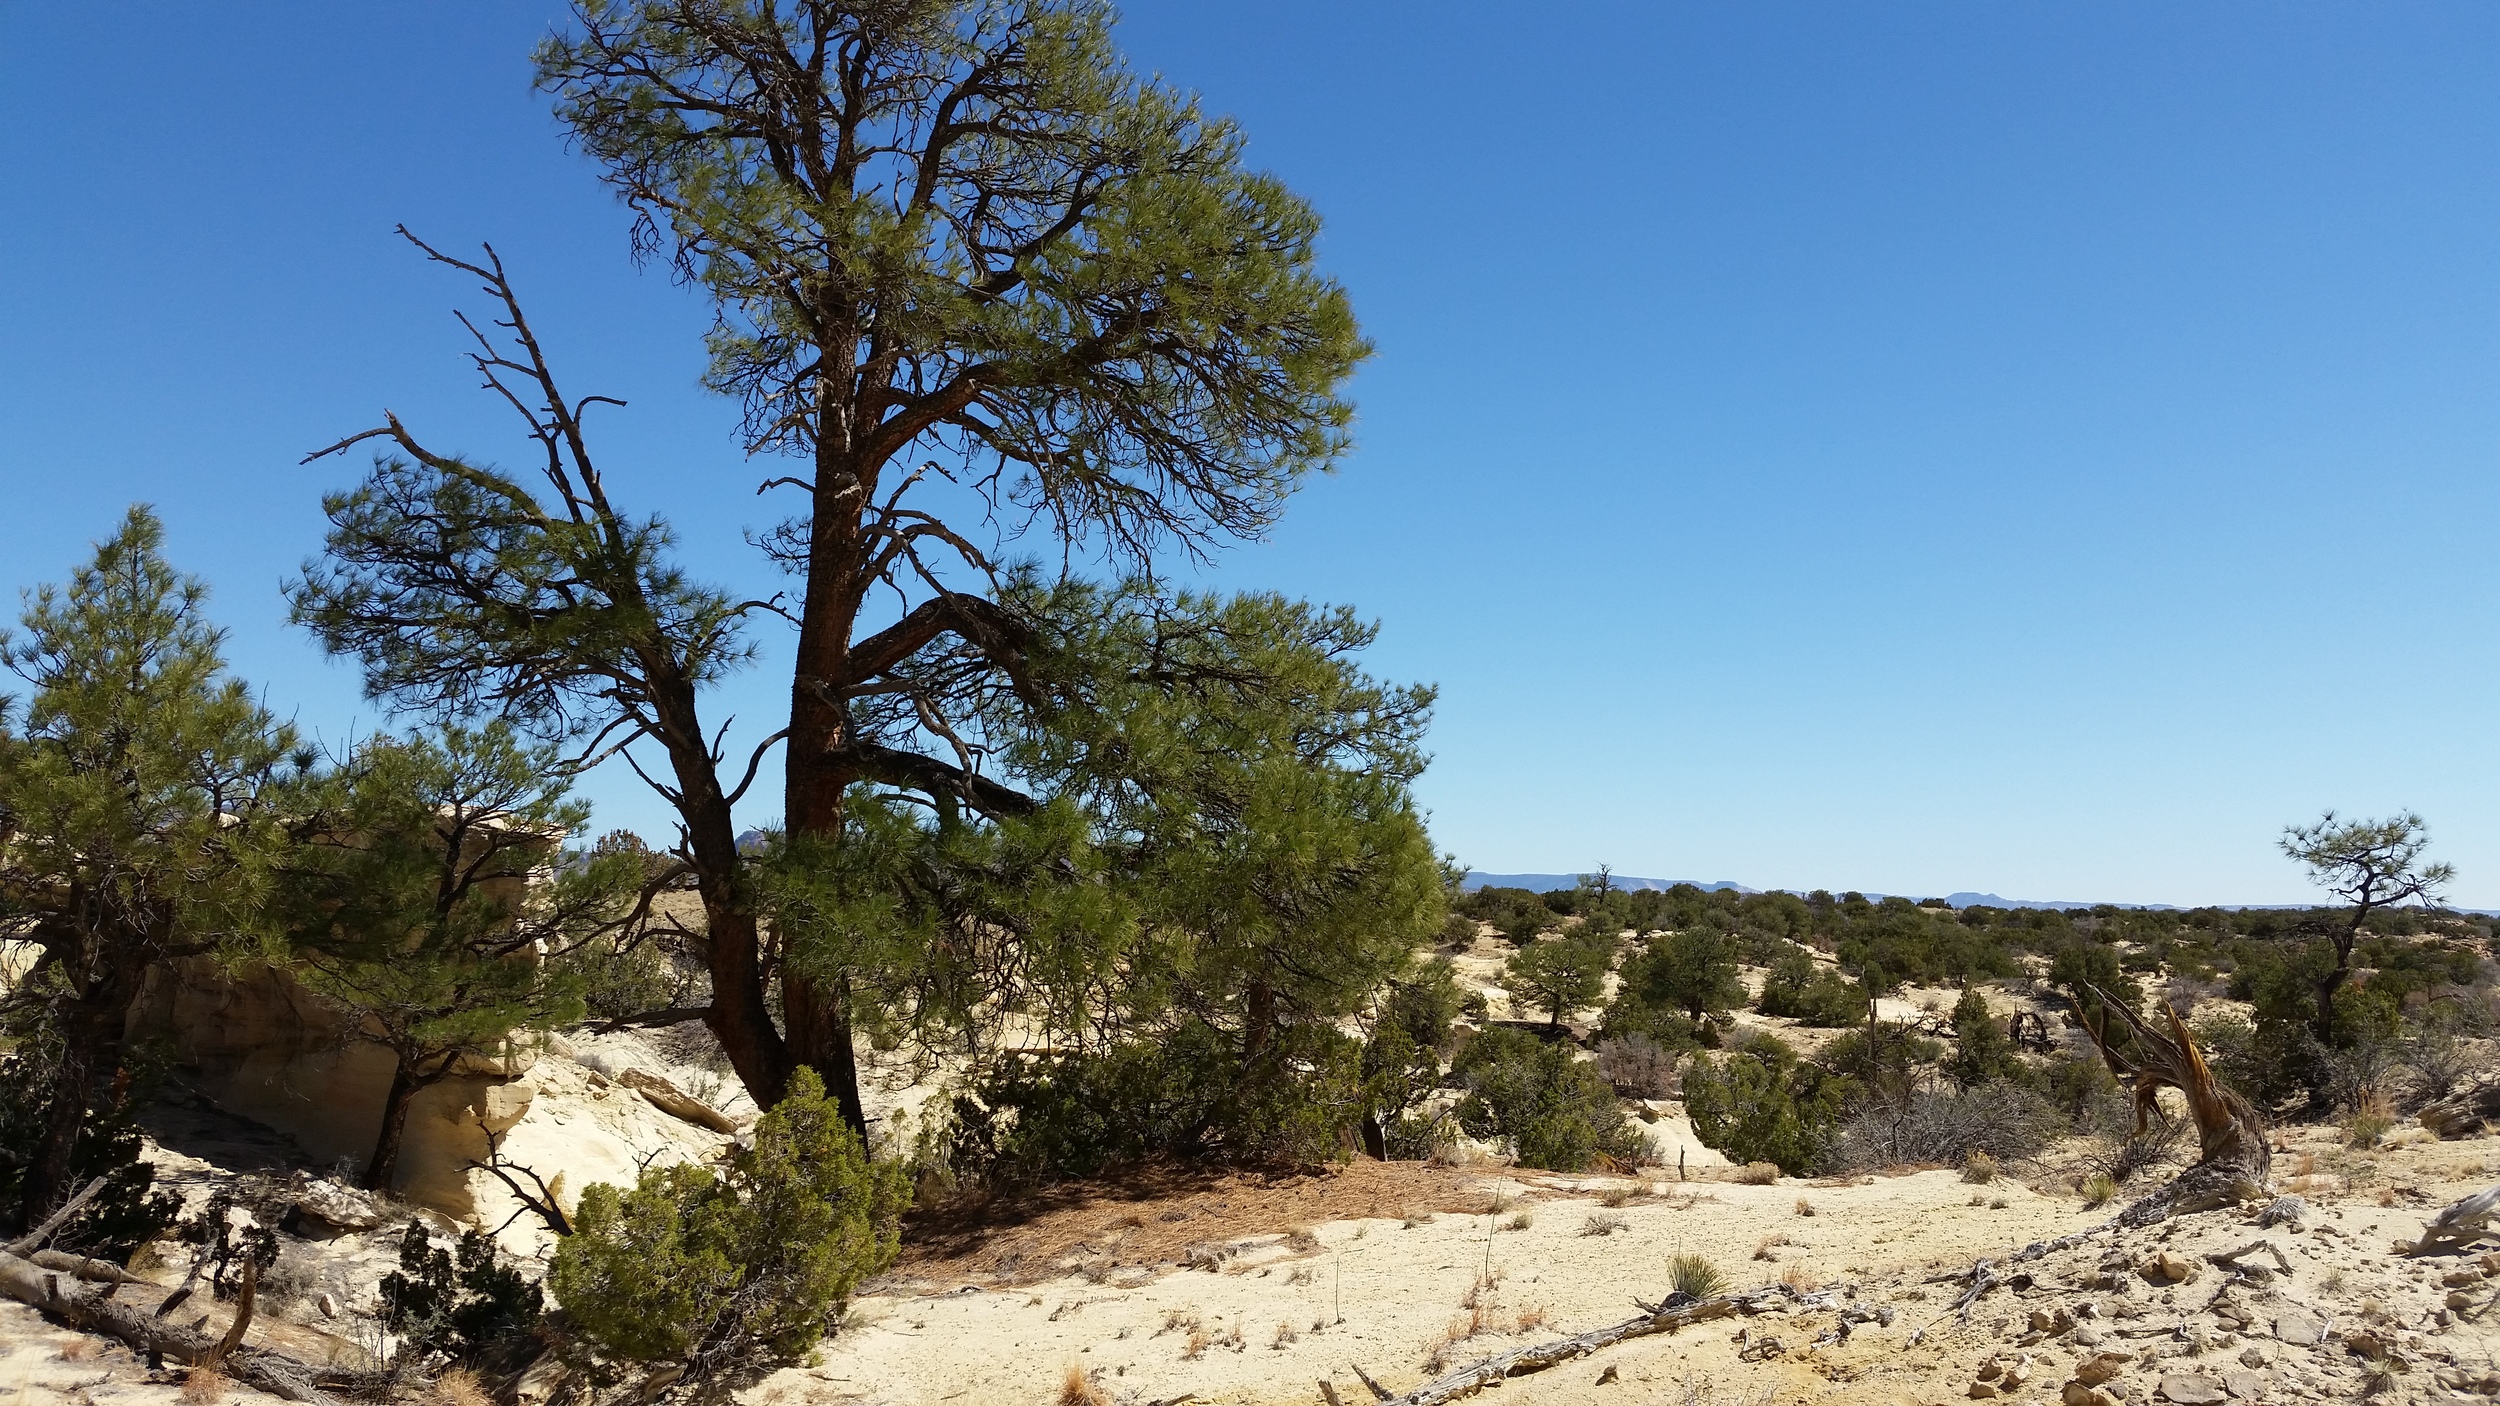  Relict ponderosas with juniper and pinon, looking toward Zia Pueblo in the distance. 